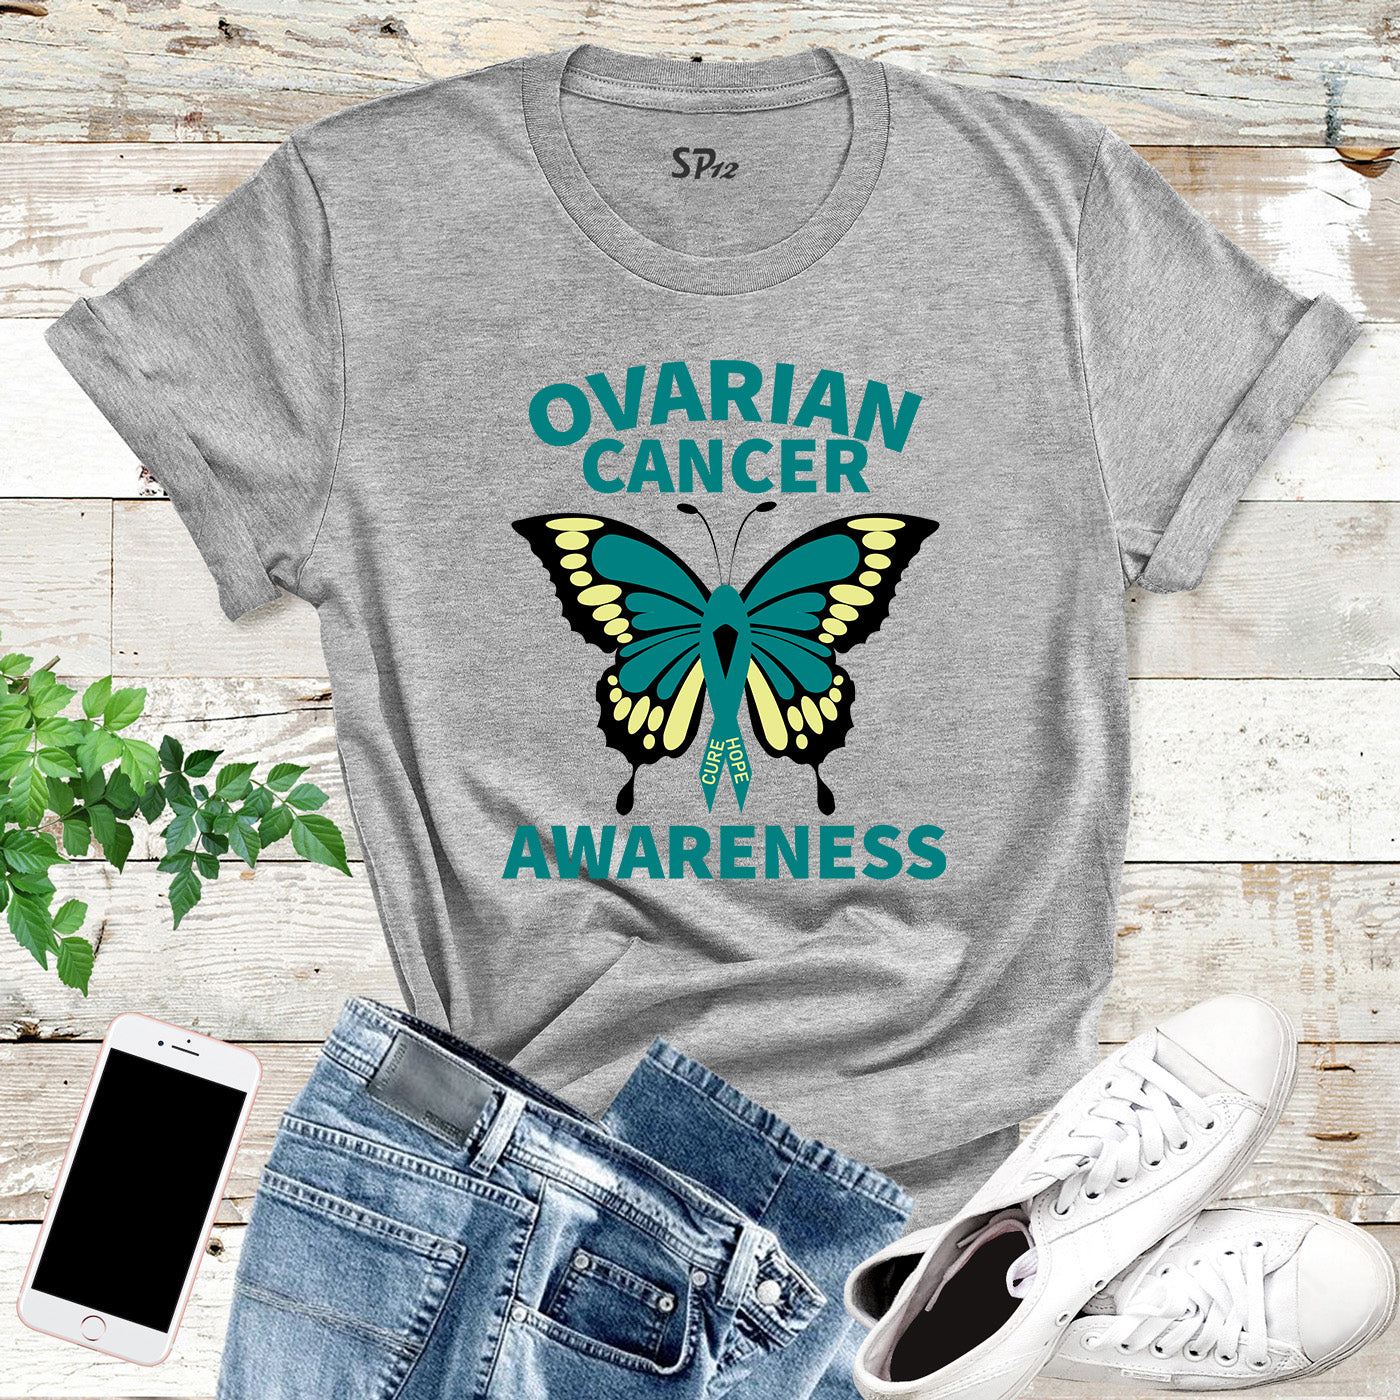 Ovarian Cancer Awareness T Shirt